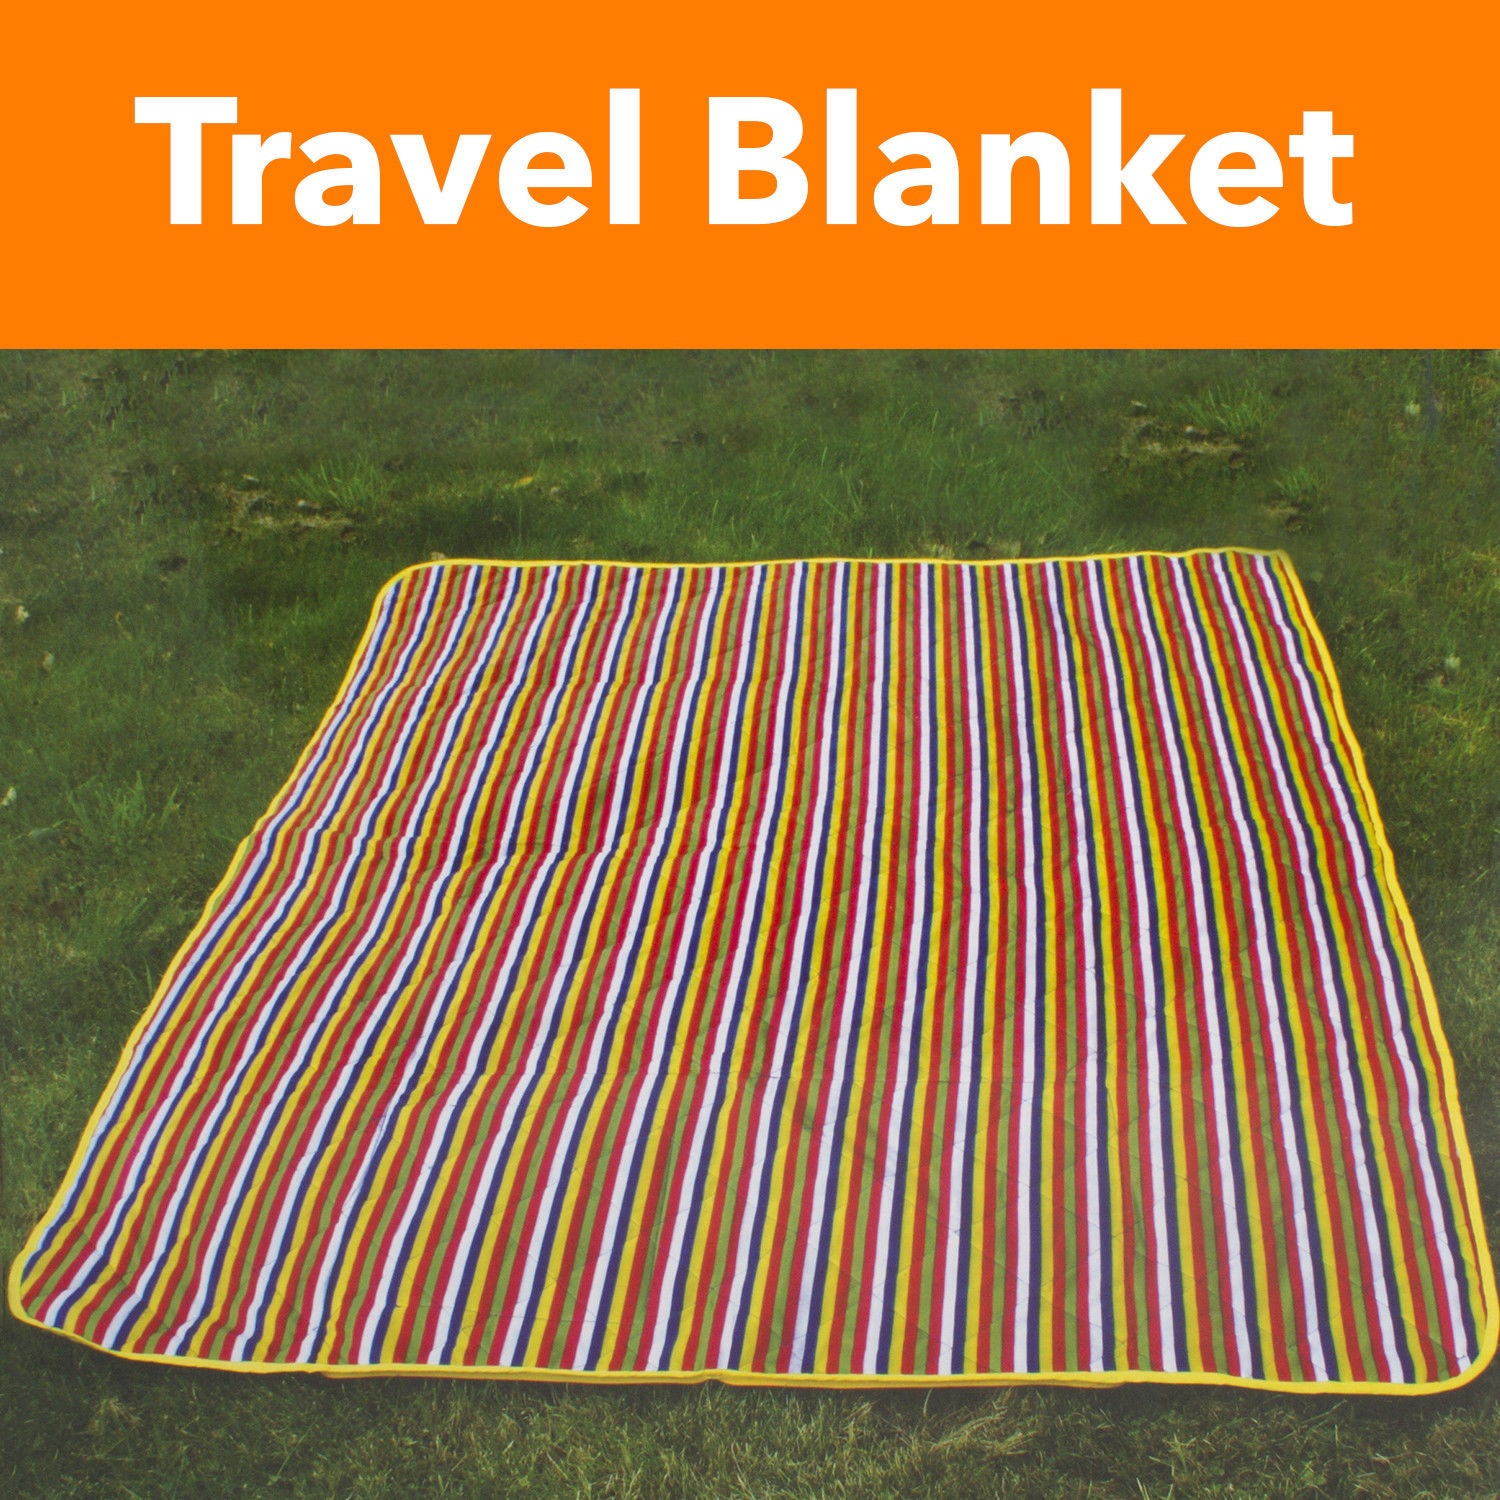 Waterproof Picnic Blanket – Large Beach Blanket - Outdoor Travel Picnic Mat Blue